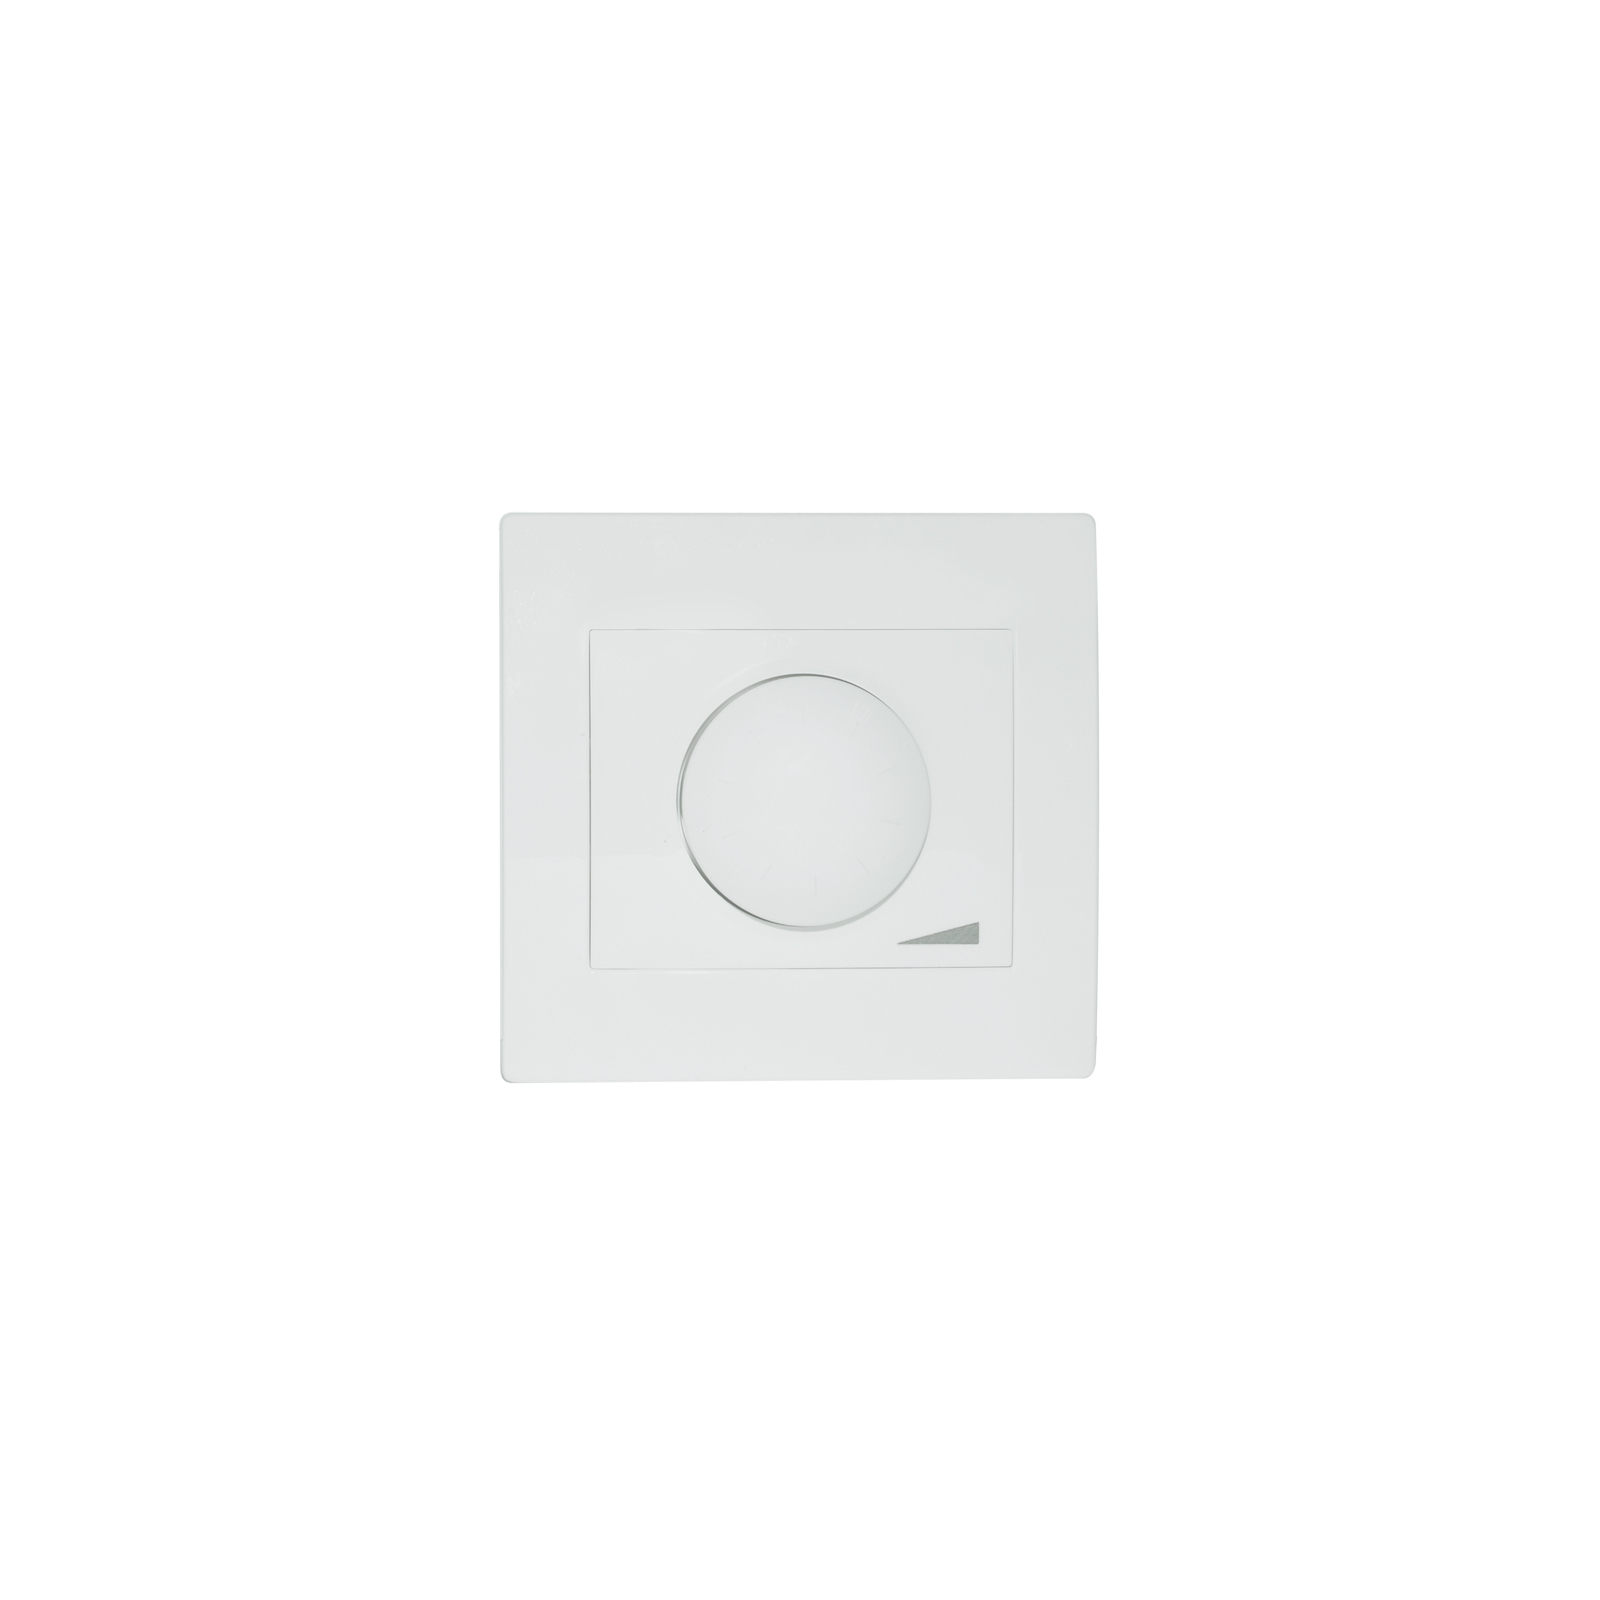 Светорегулятор Sven SE-119 white (7100099) изображение 2